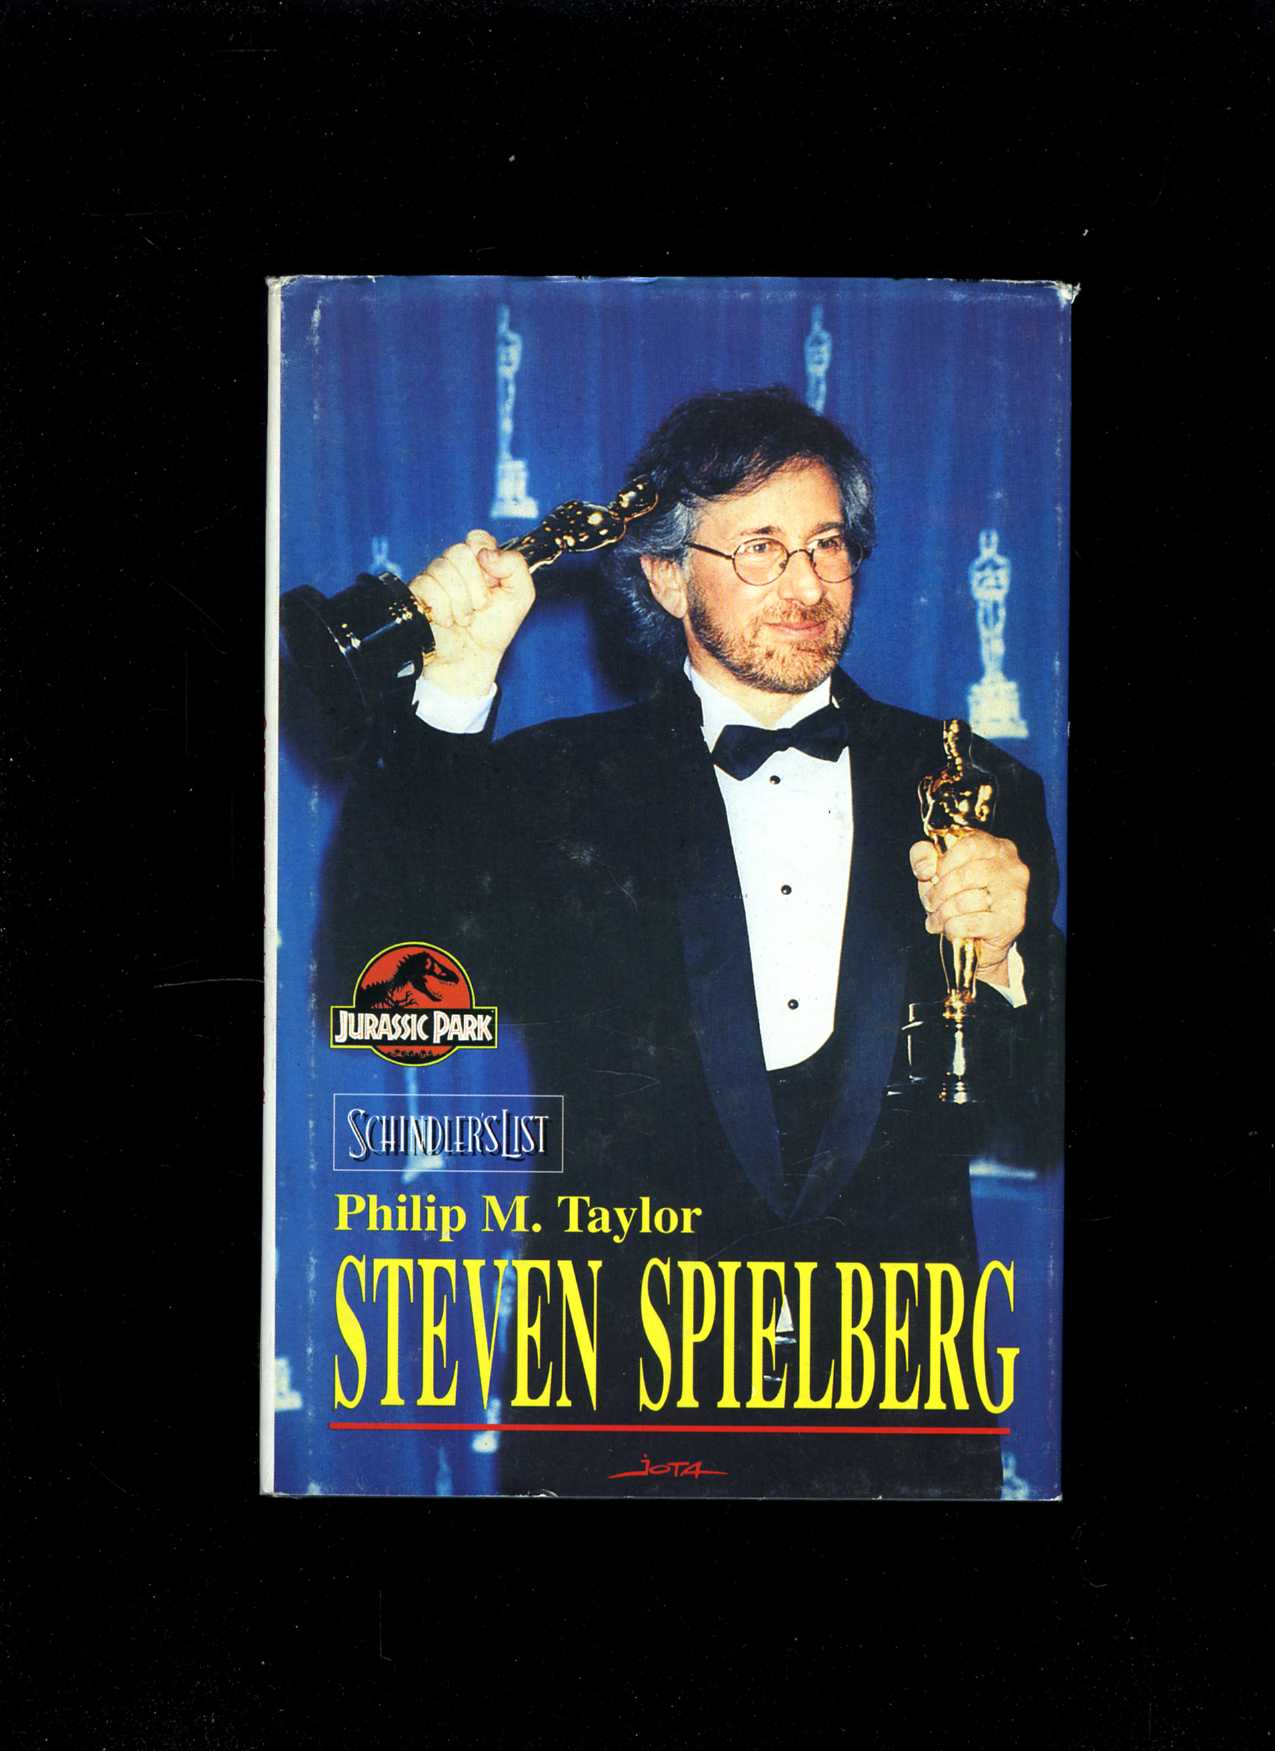 Steven Spielberg (Philip M. Taylor)